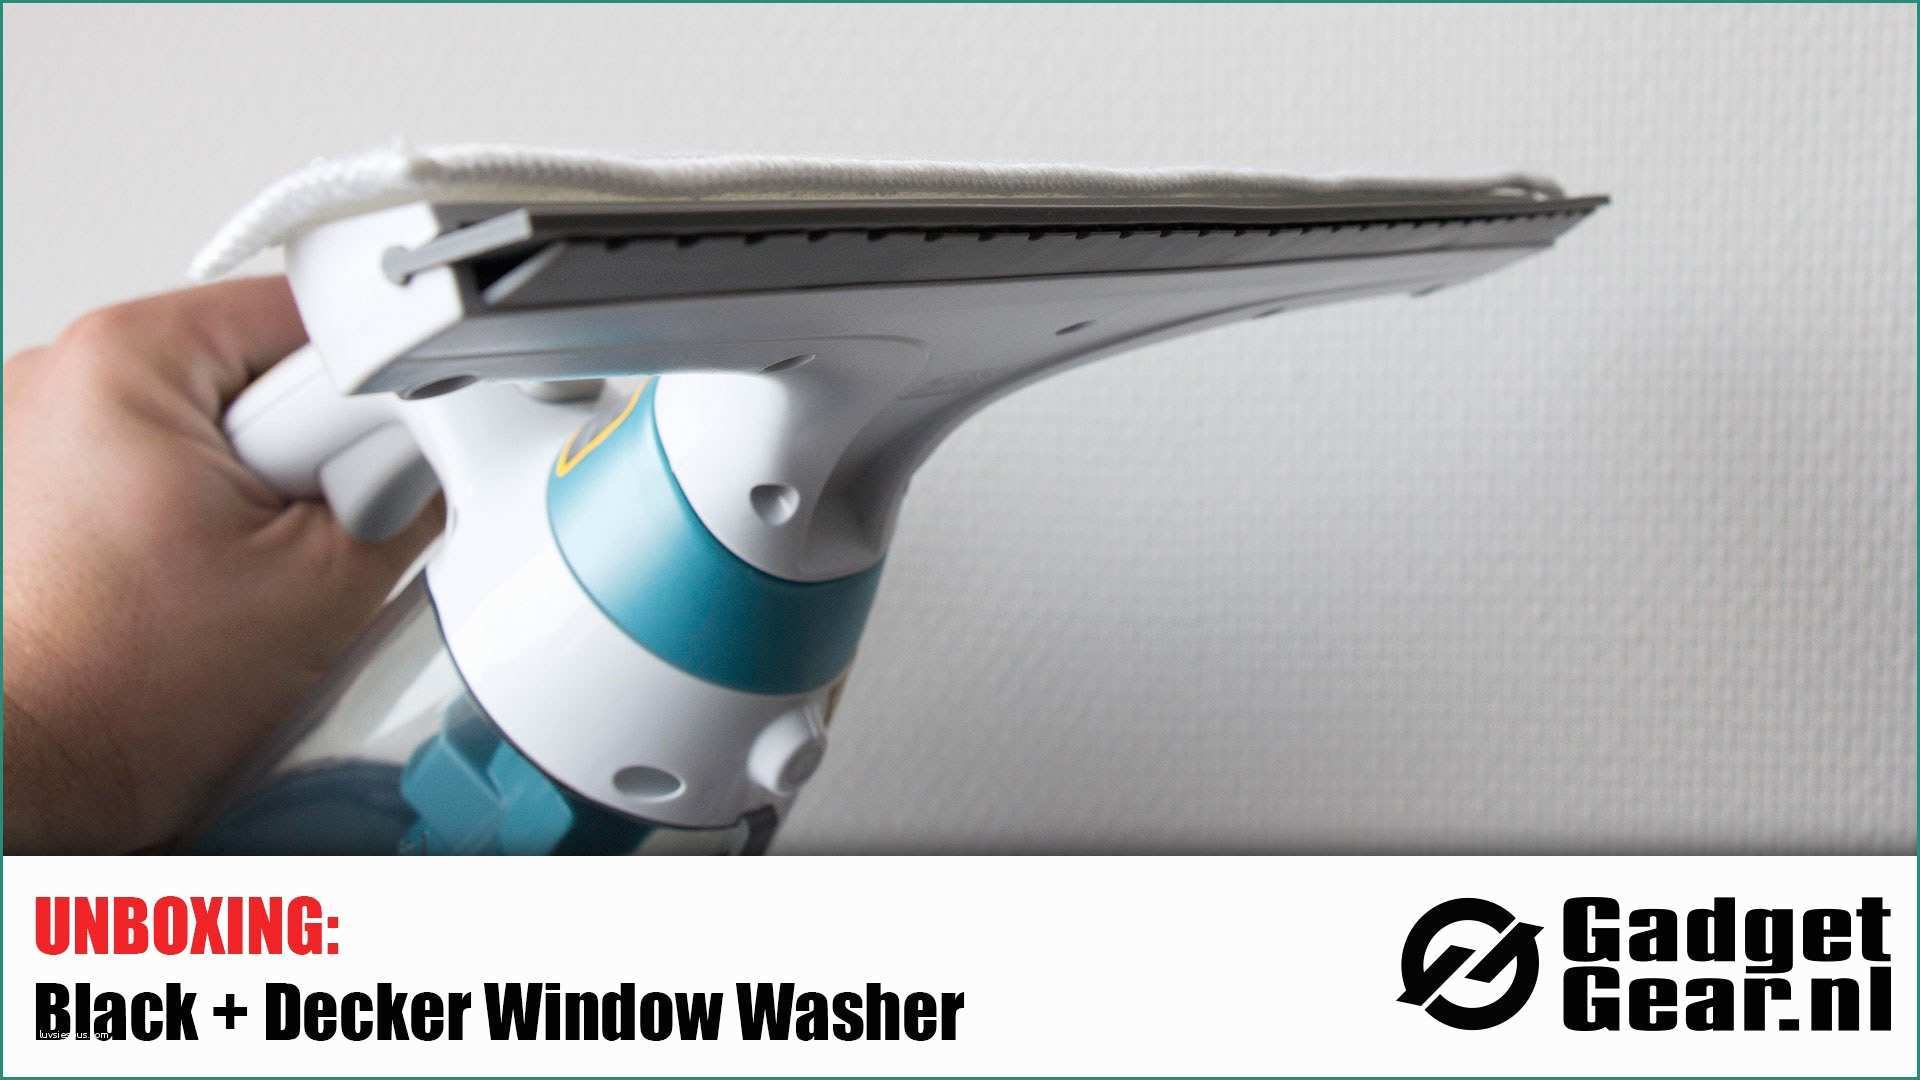 Black and Decker Steam Mop Opinioni E Unboxing Black Decker Window Washer